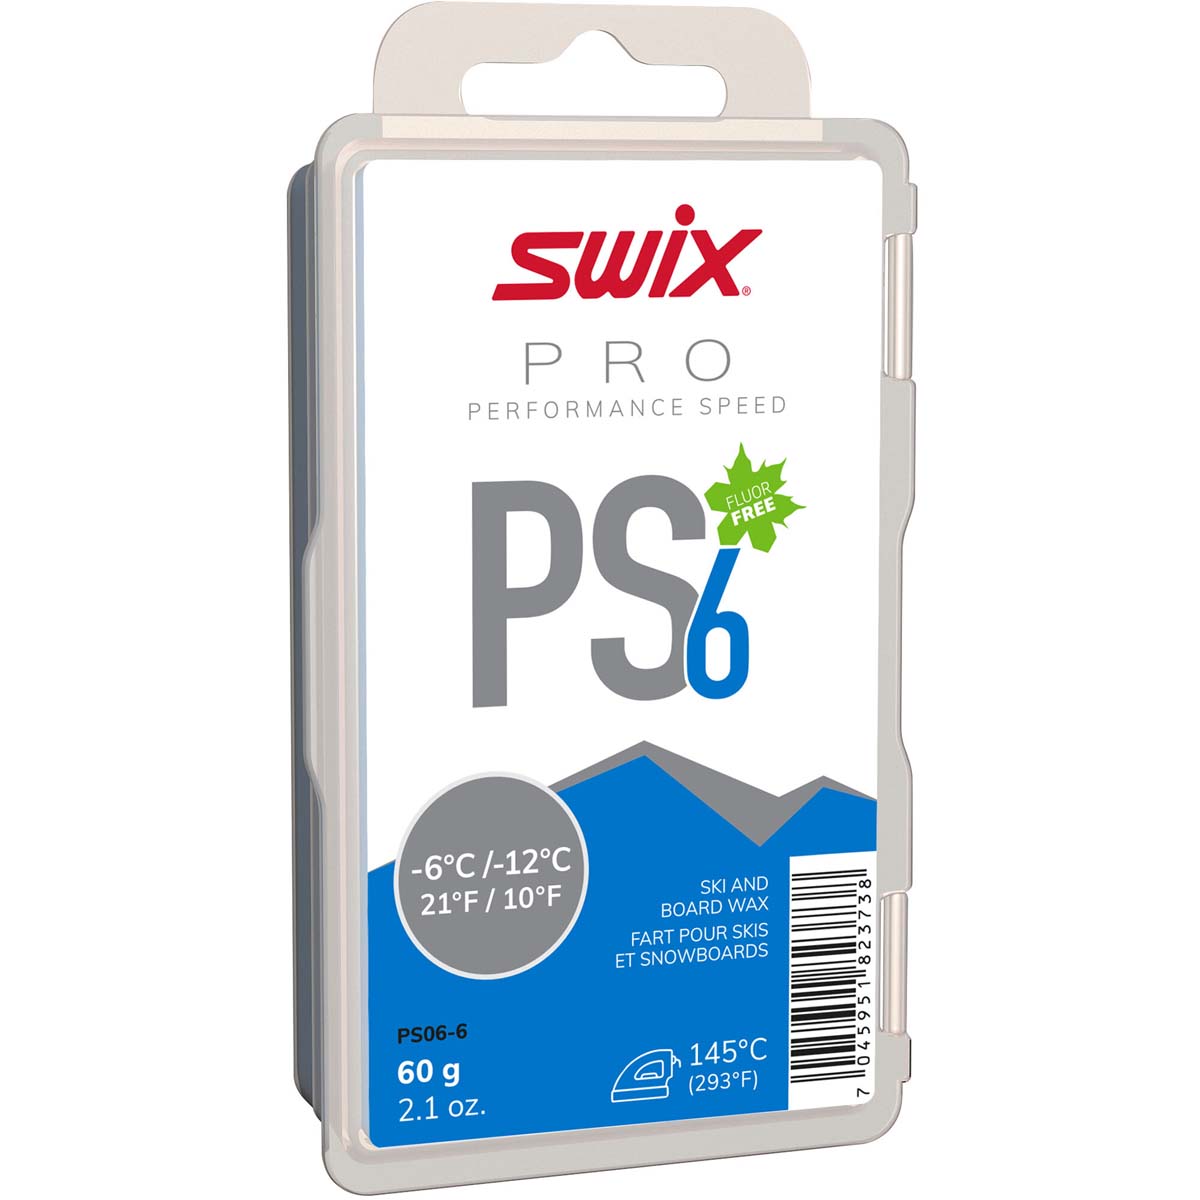 Skluzný vosk Swix Performance Speed, PS6 modrý,- 6°C/-12°C, 60g